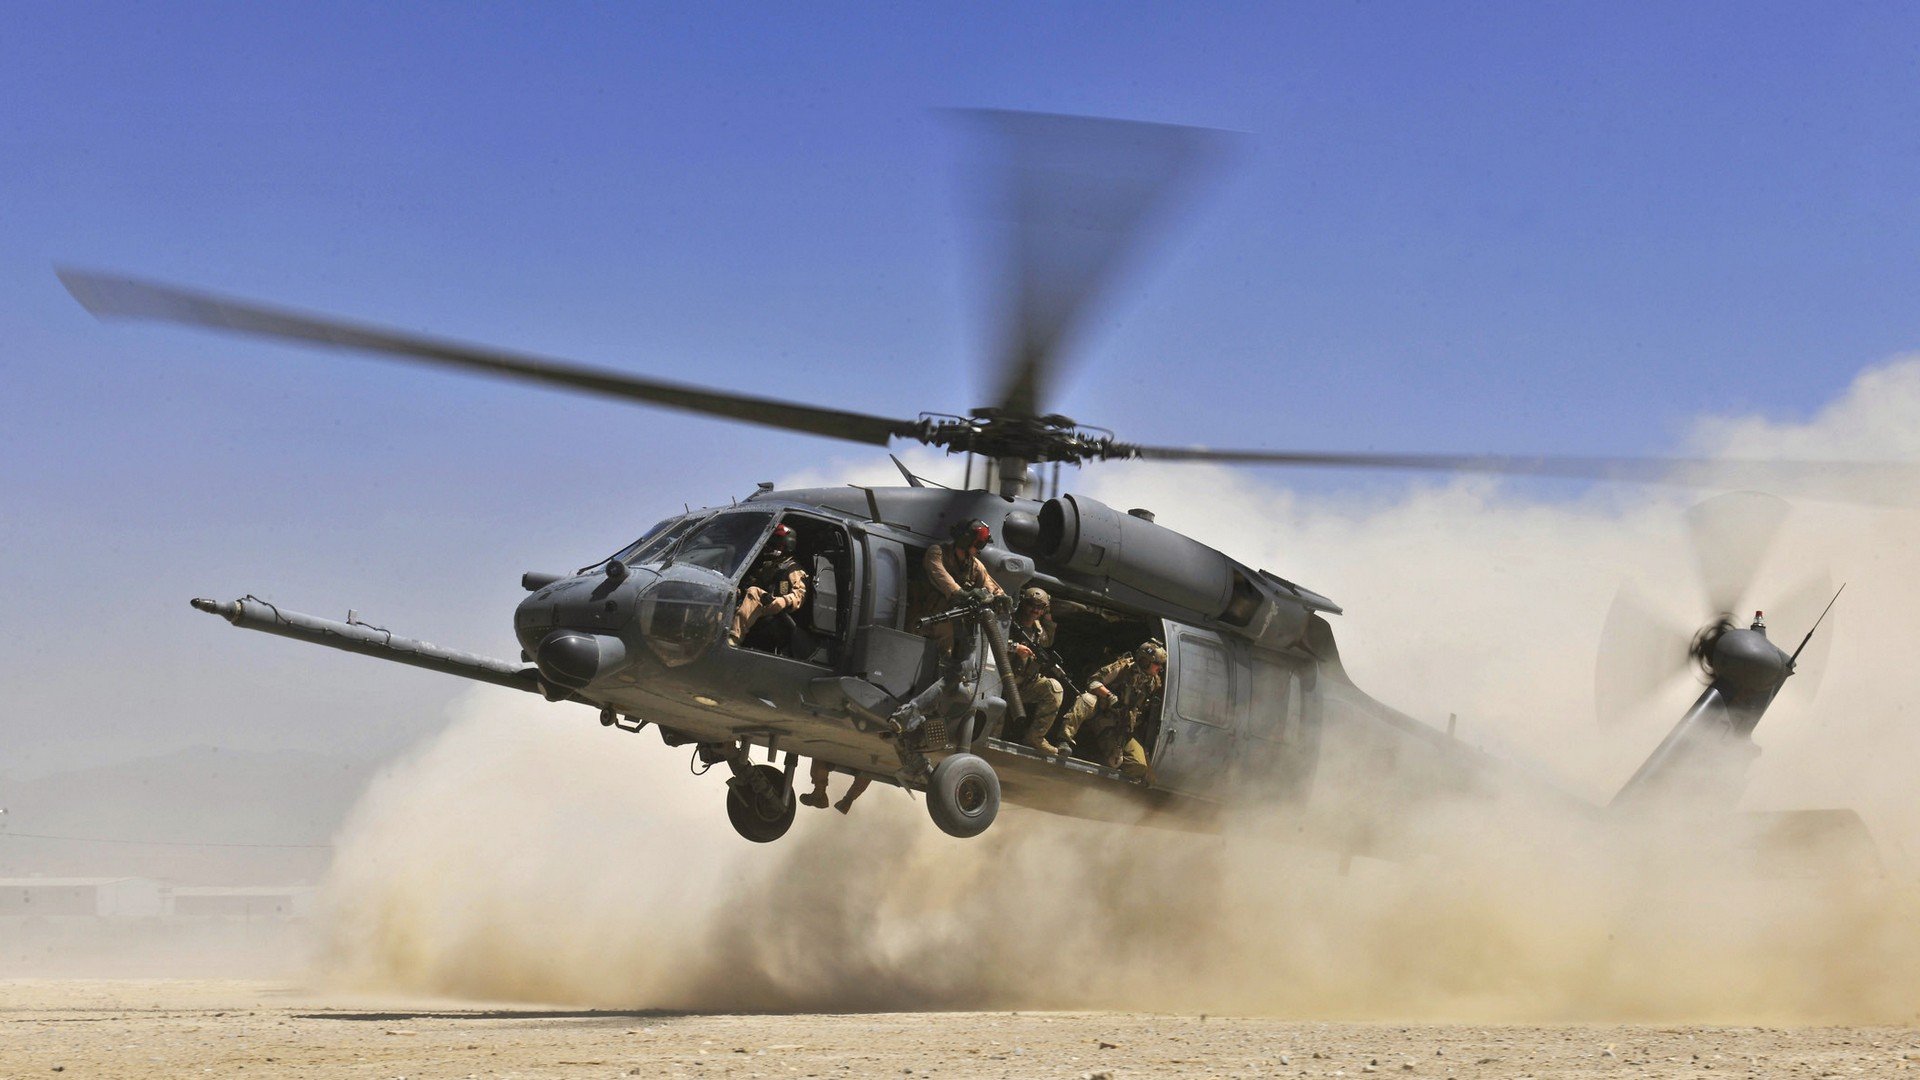 1920x1080 helicopters us air force hh 60g combat rescue combat wallpaper JPG 249 kB. Mocah HD Wallpaper